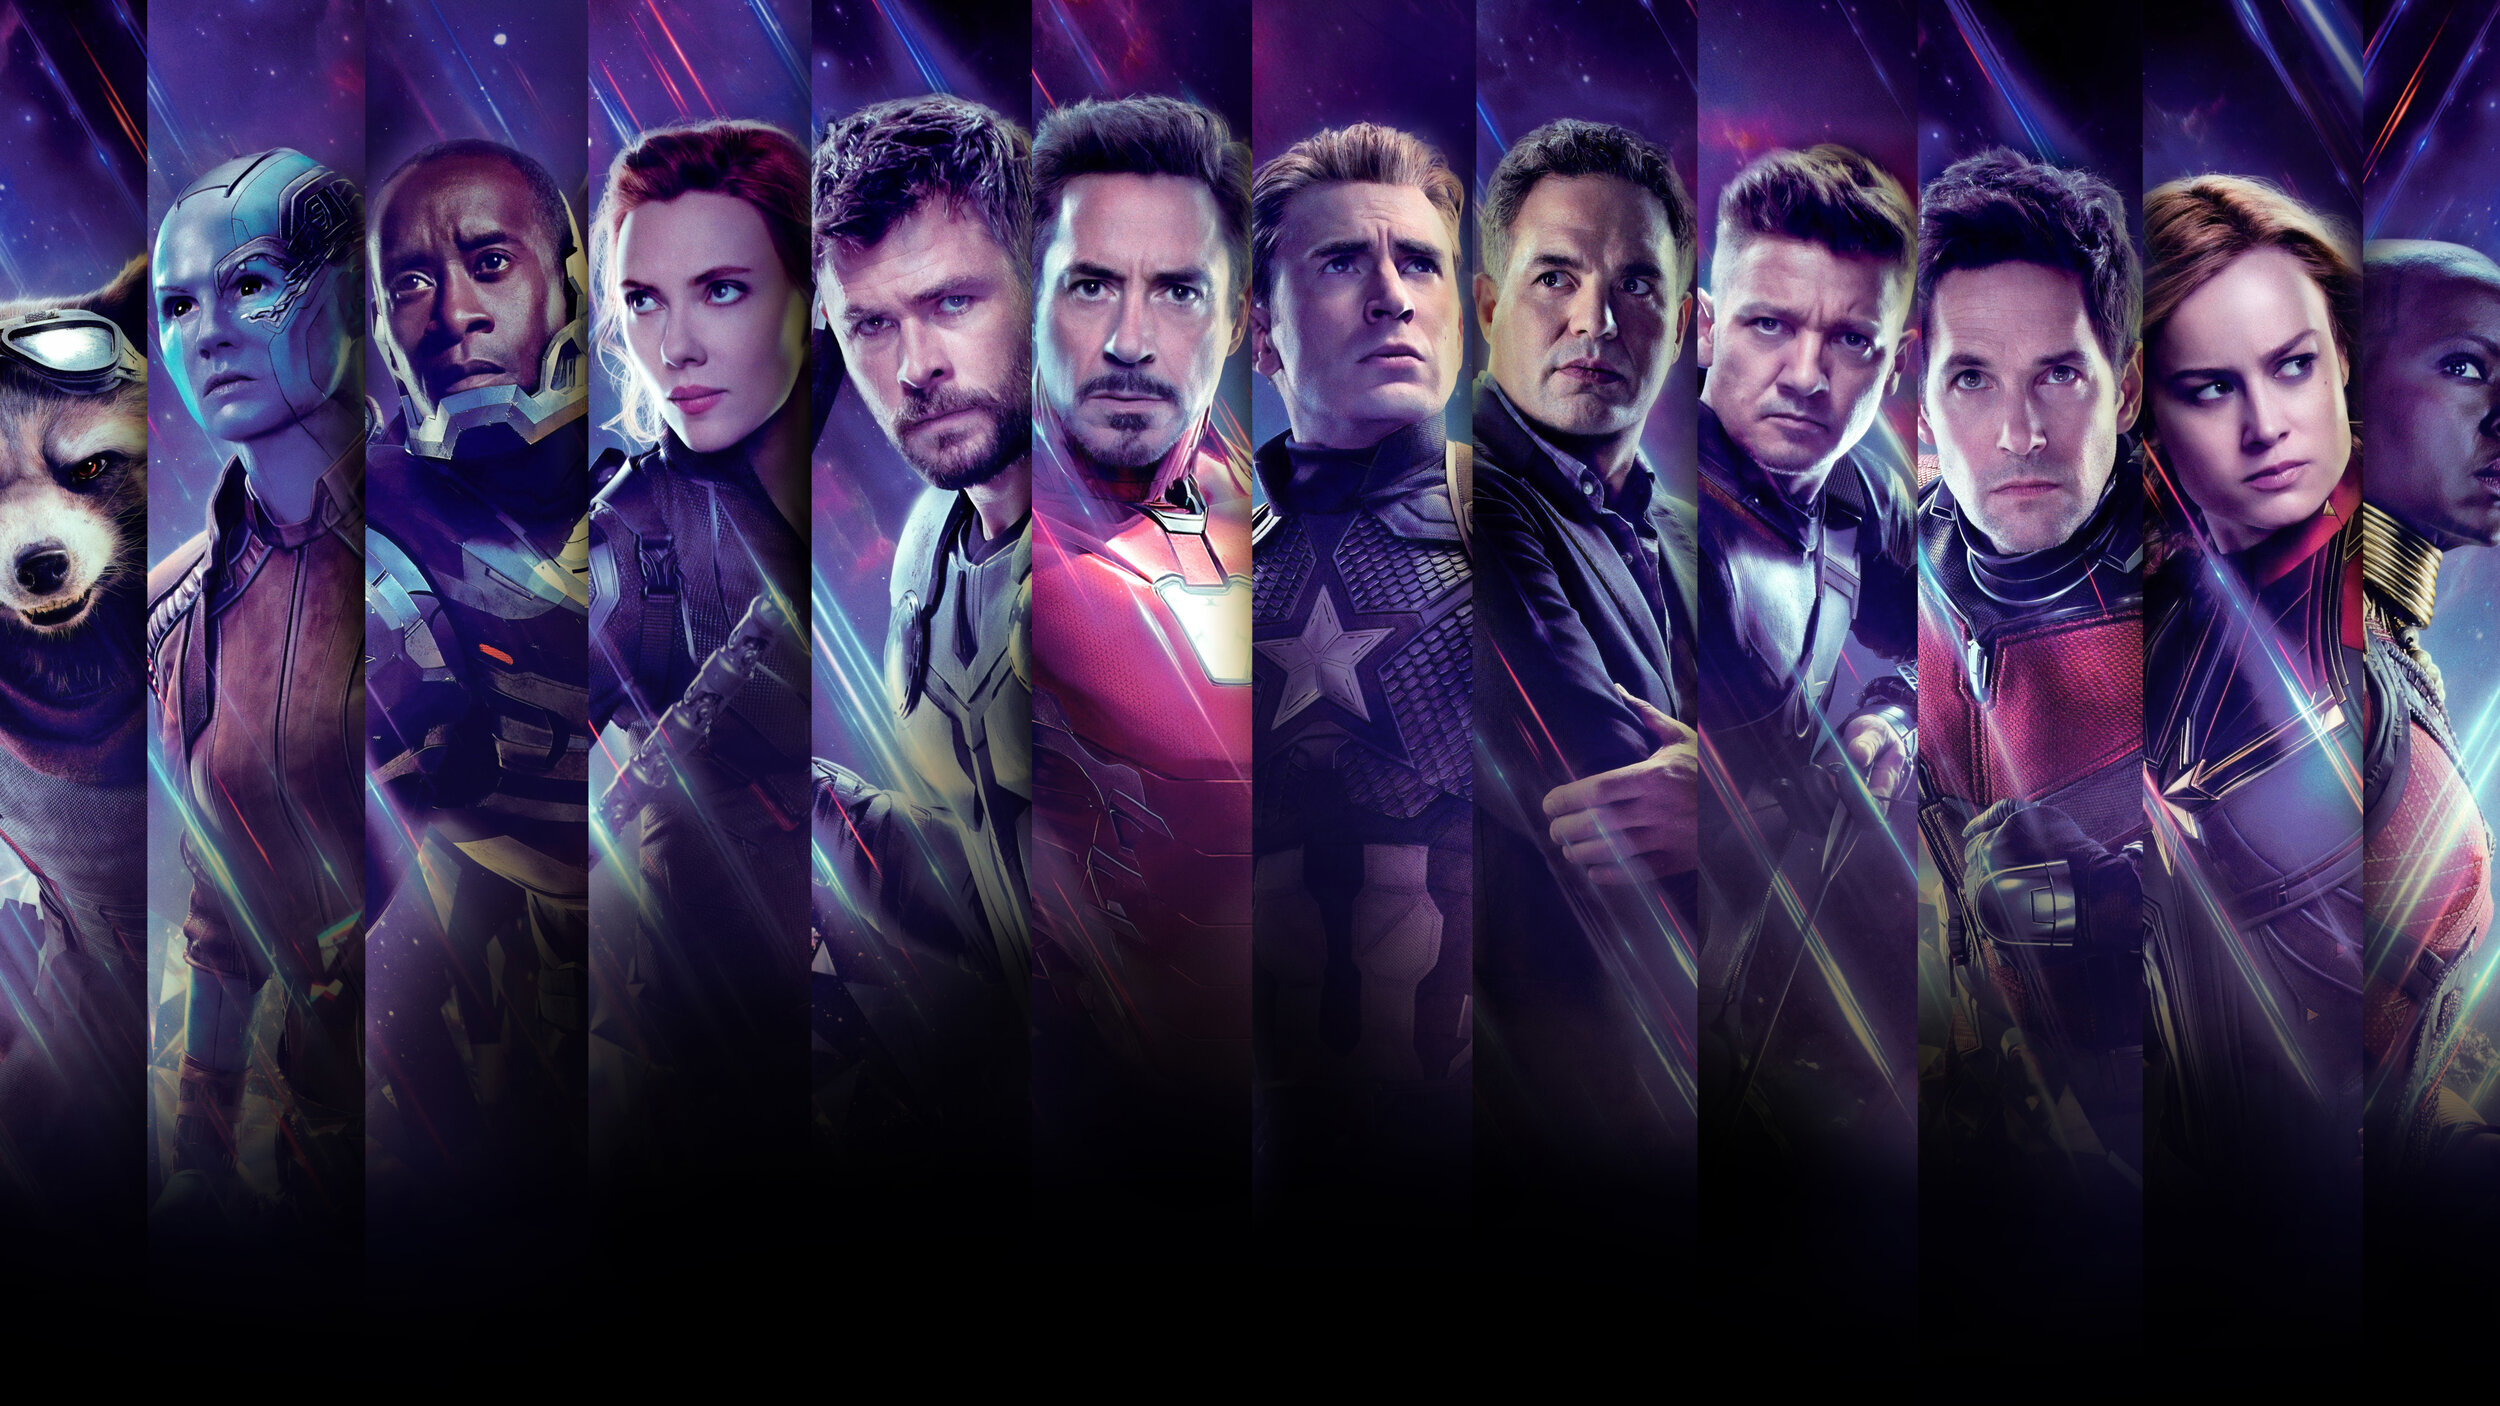 Avengers: Endgame movie review (2019)